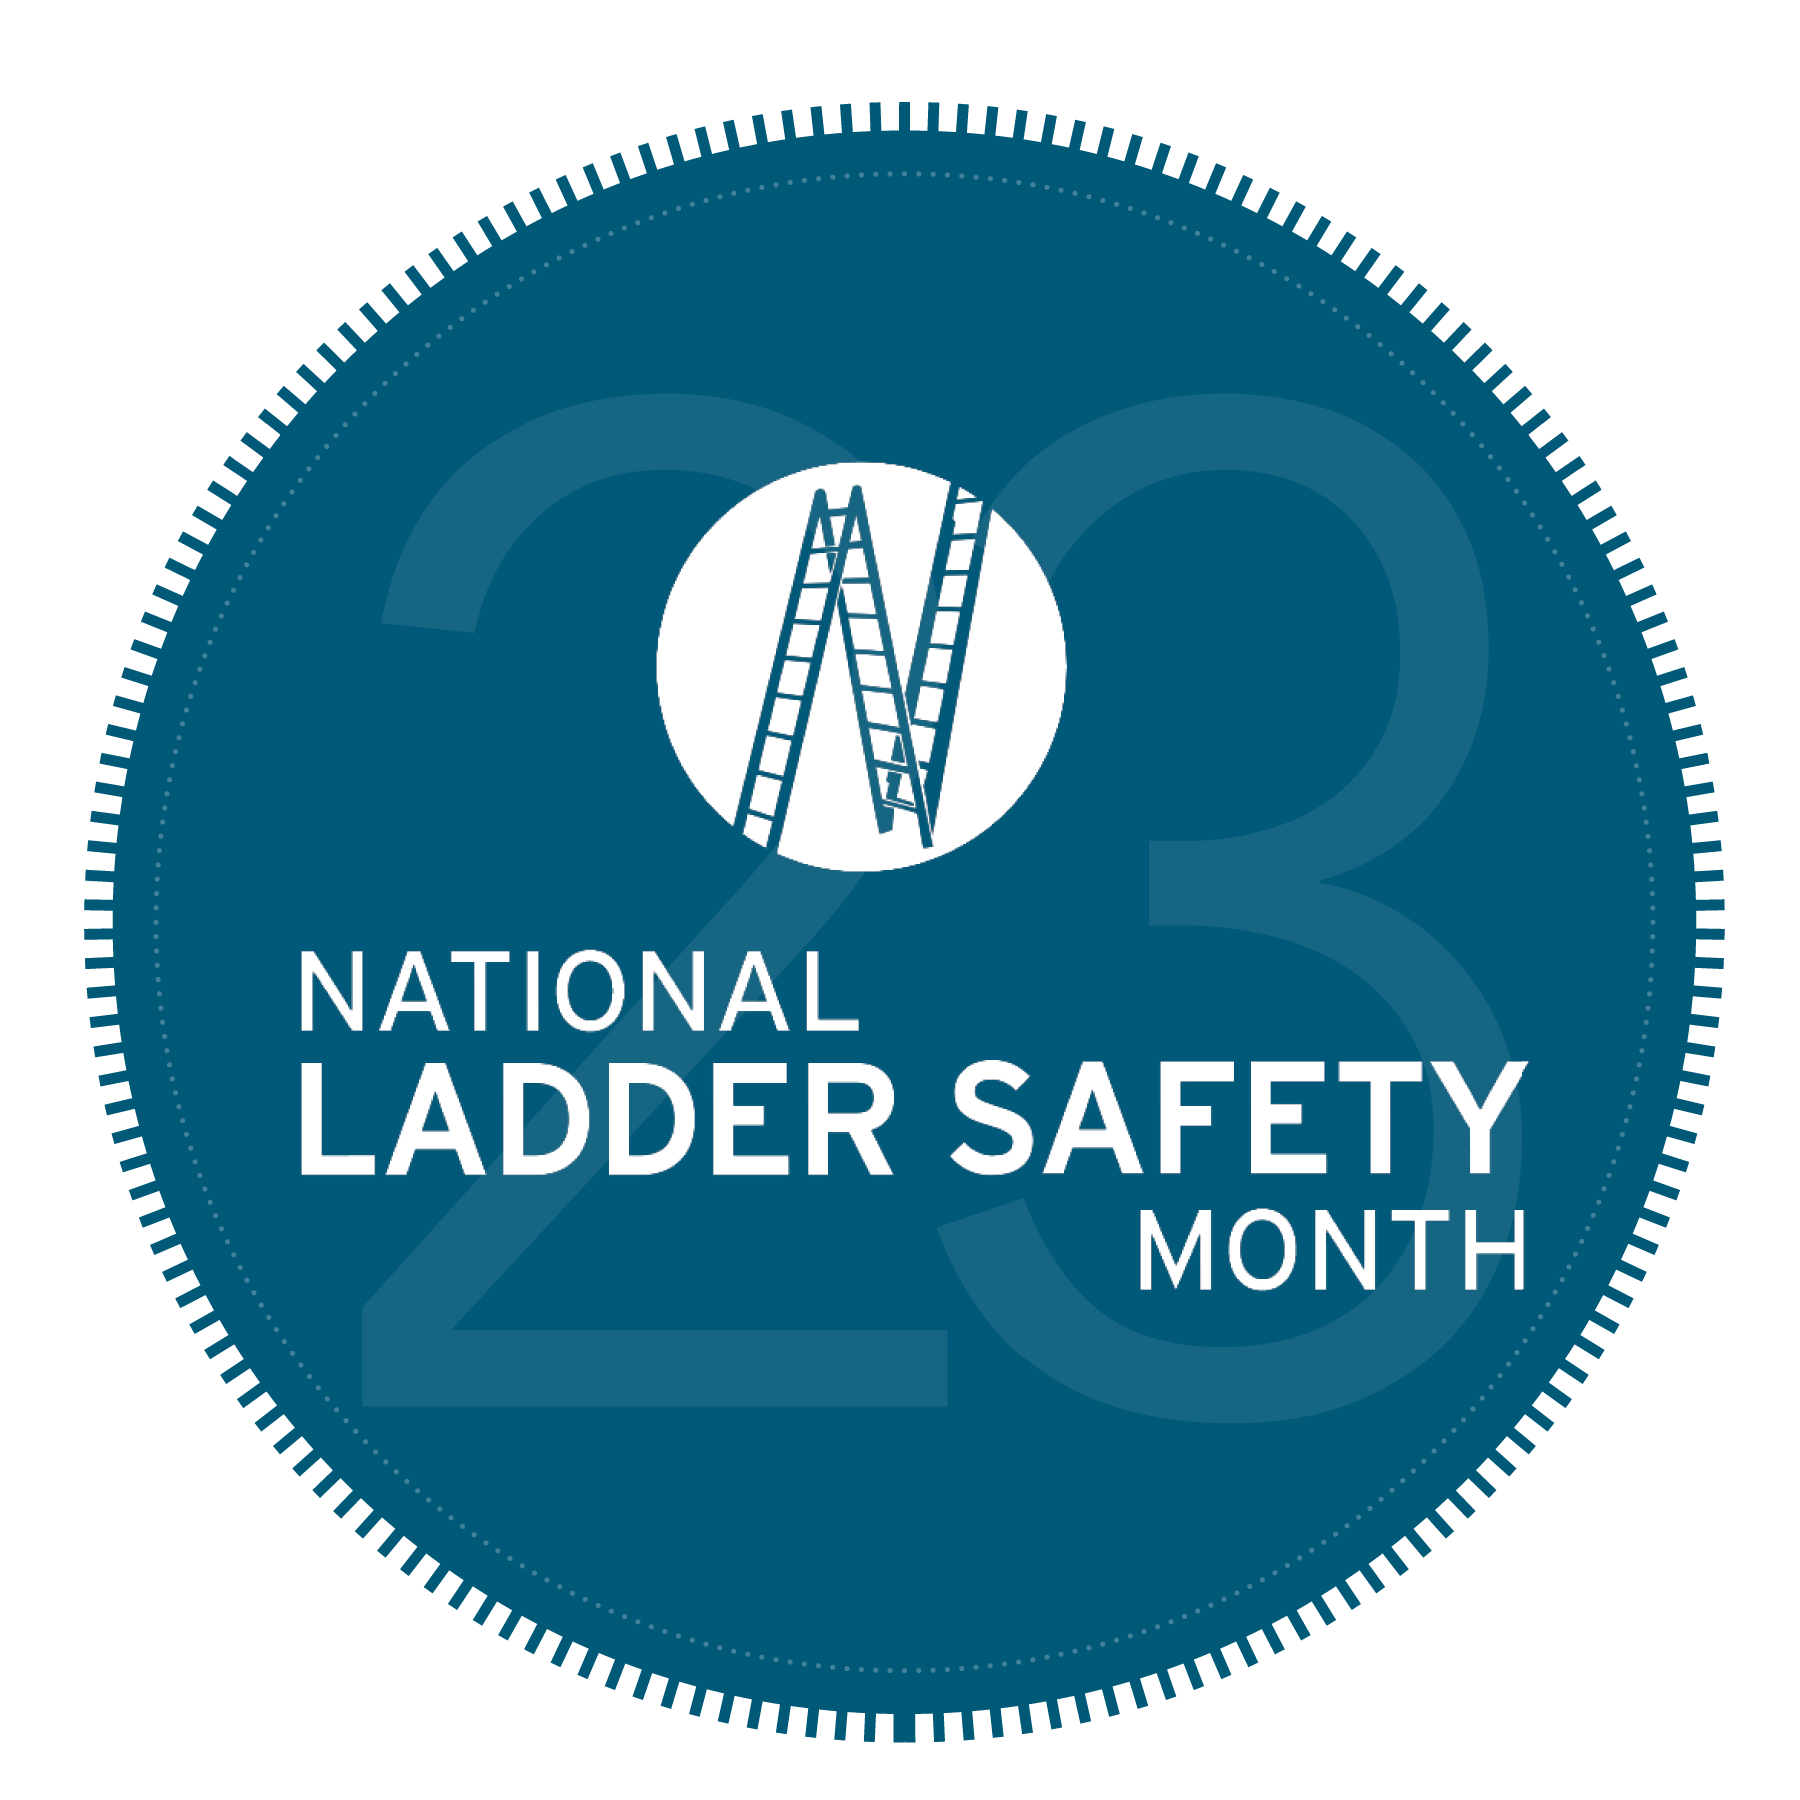 National Ladder Safety Month image